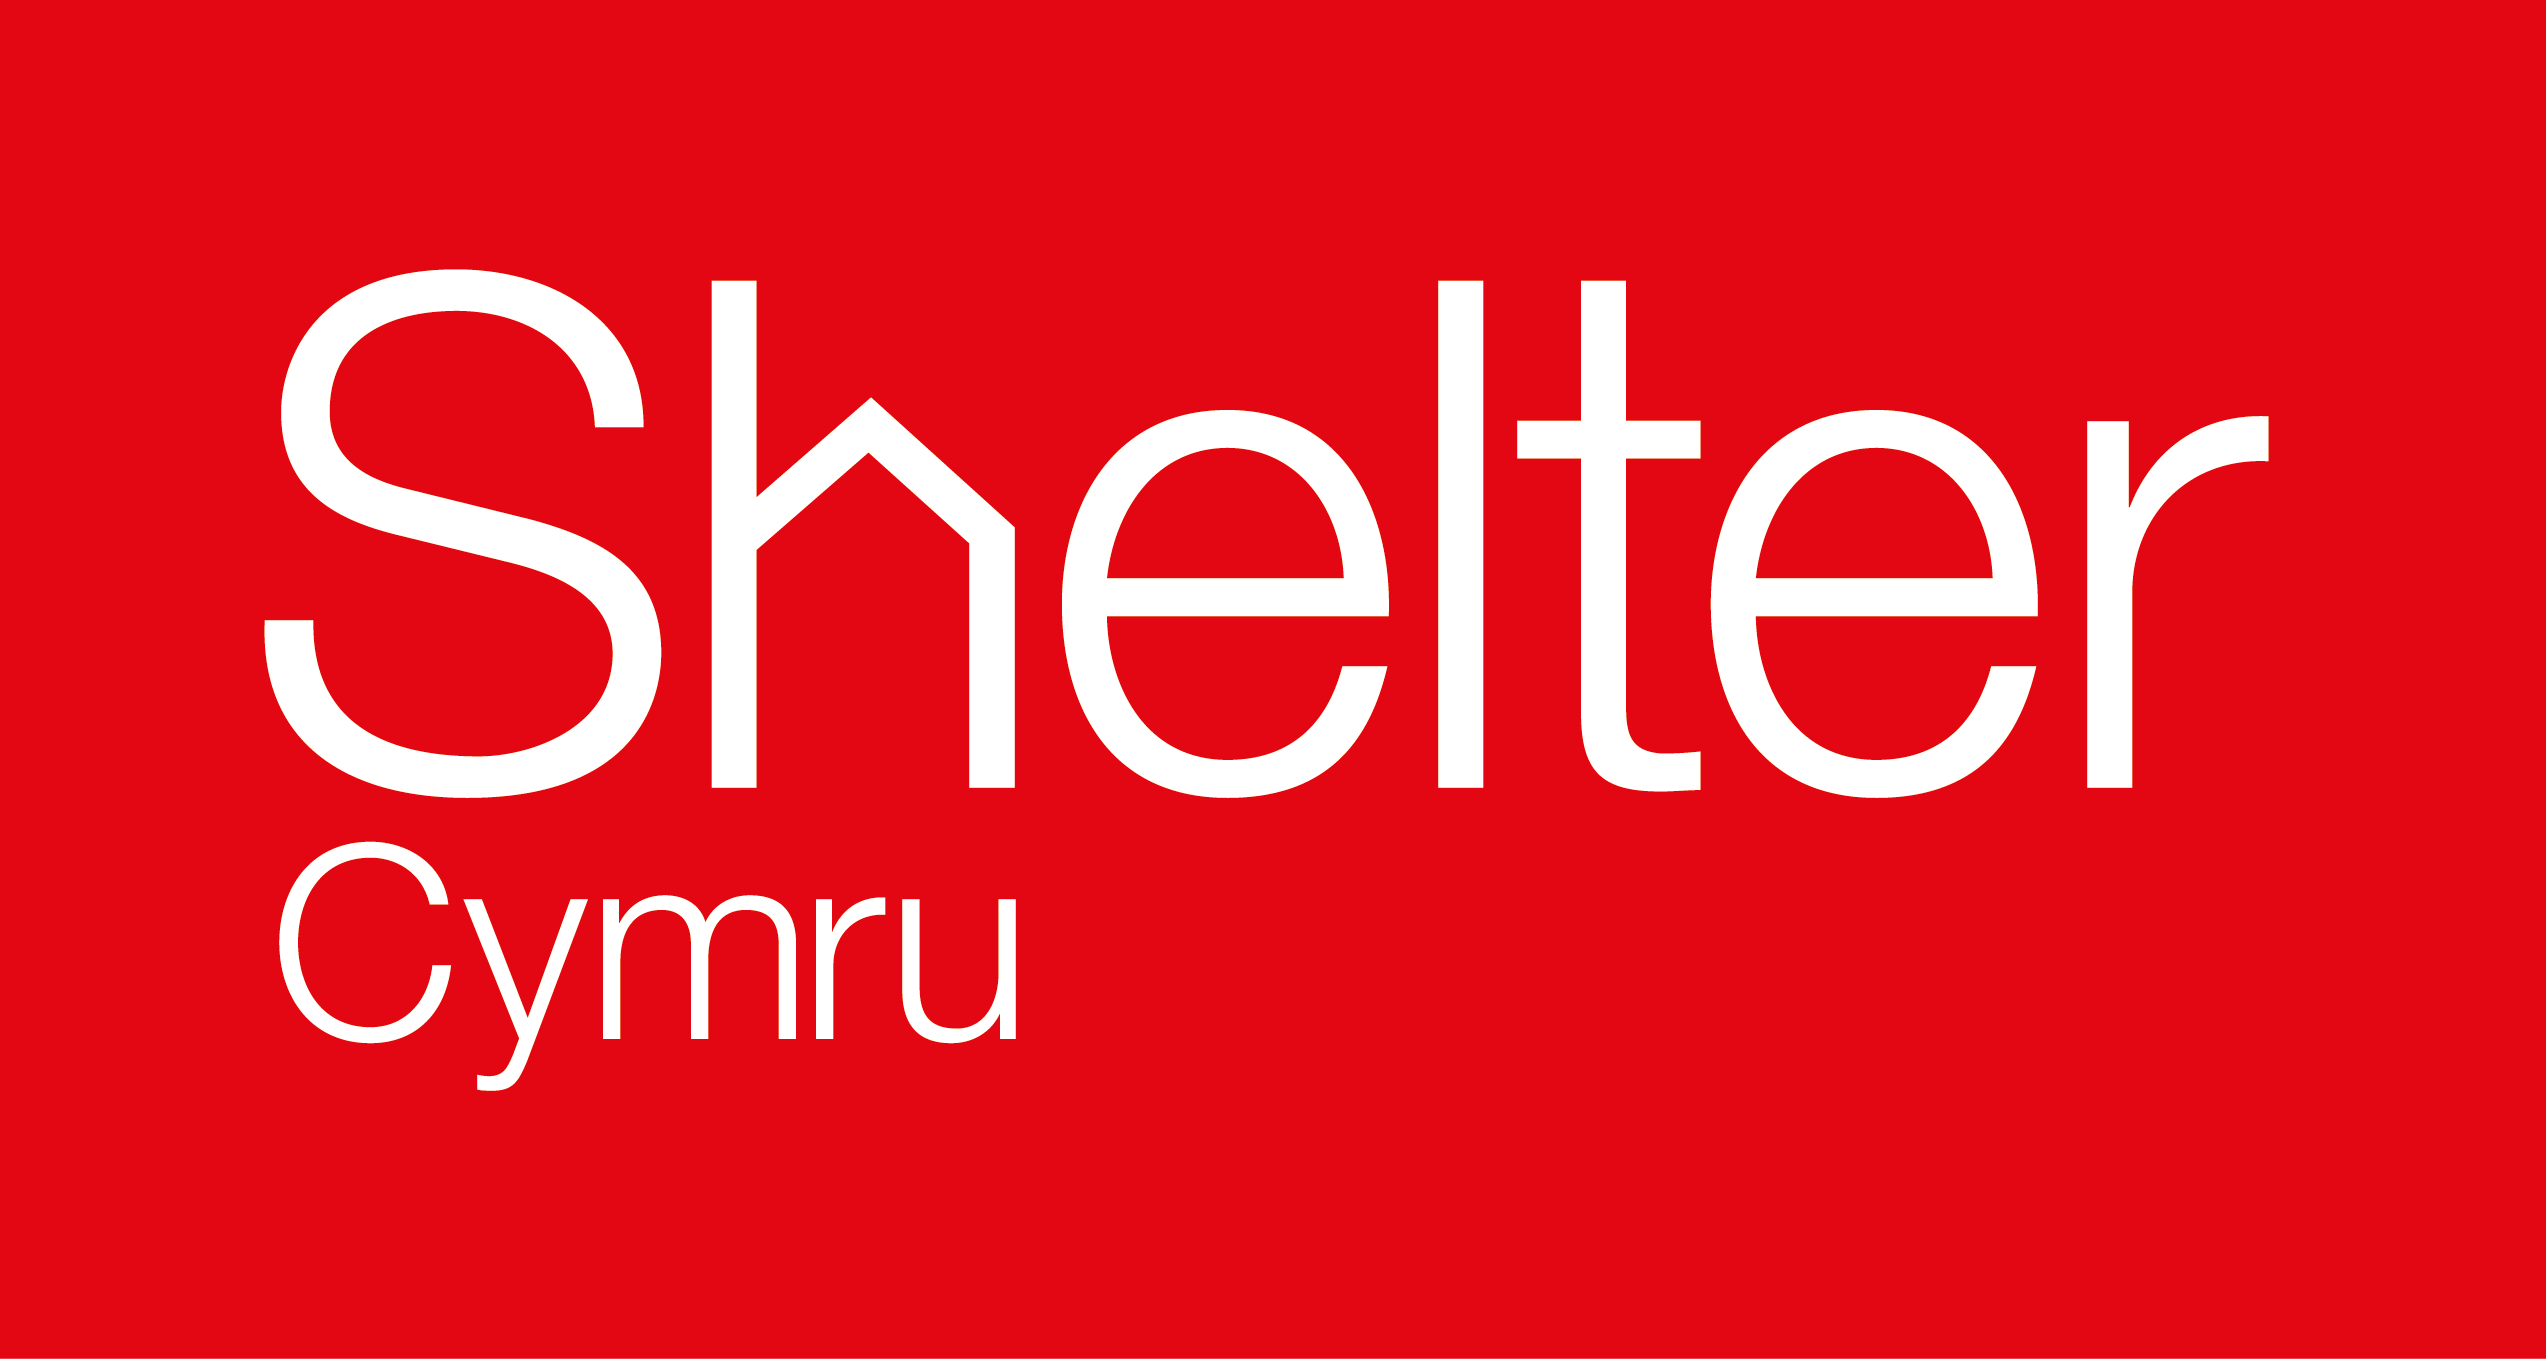 White with Red Background Logo - Shelter Cymru logo - white on red background - Shelter Cymru